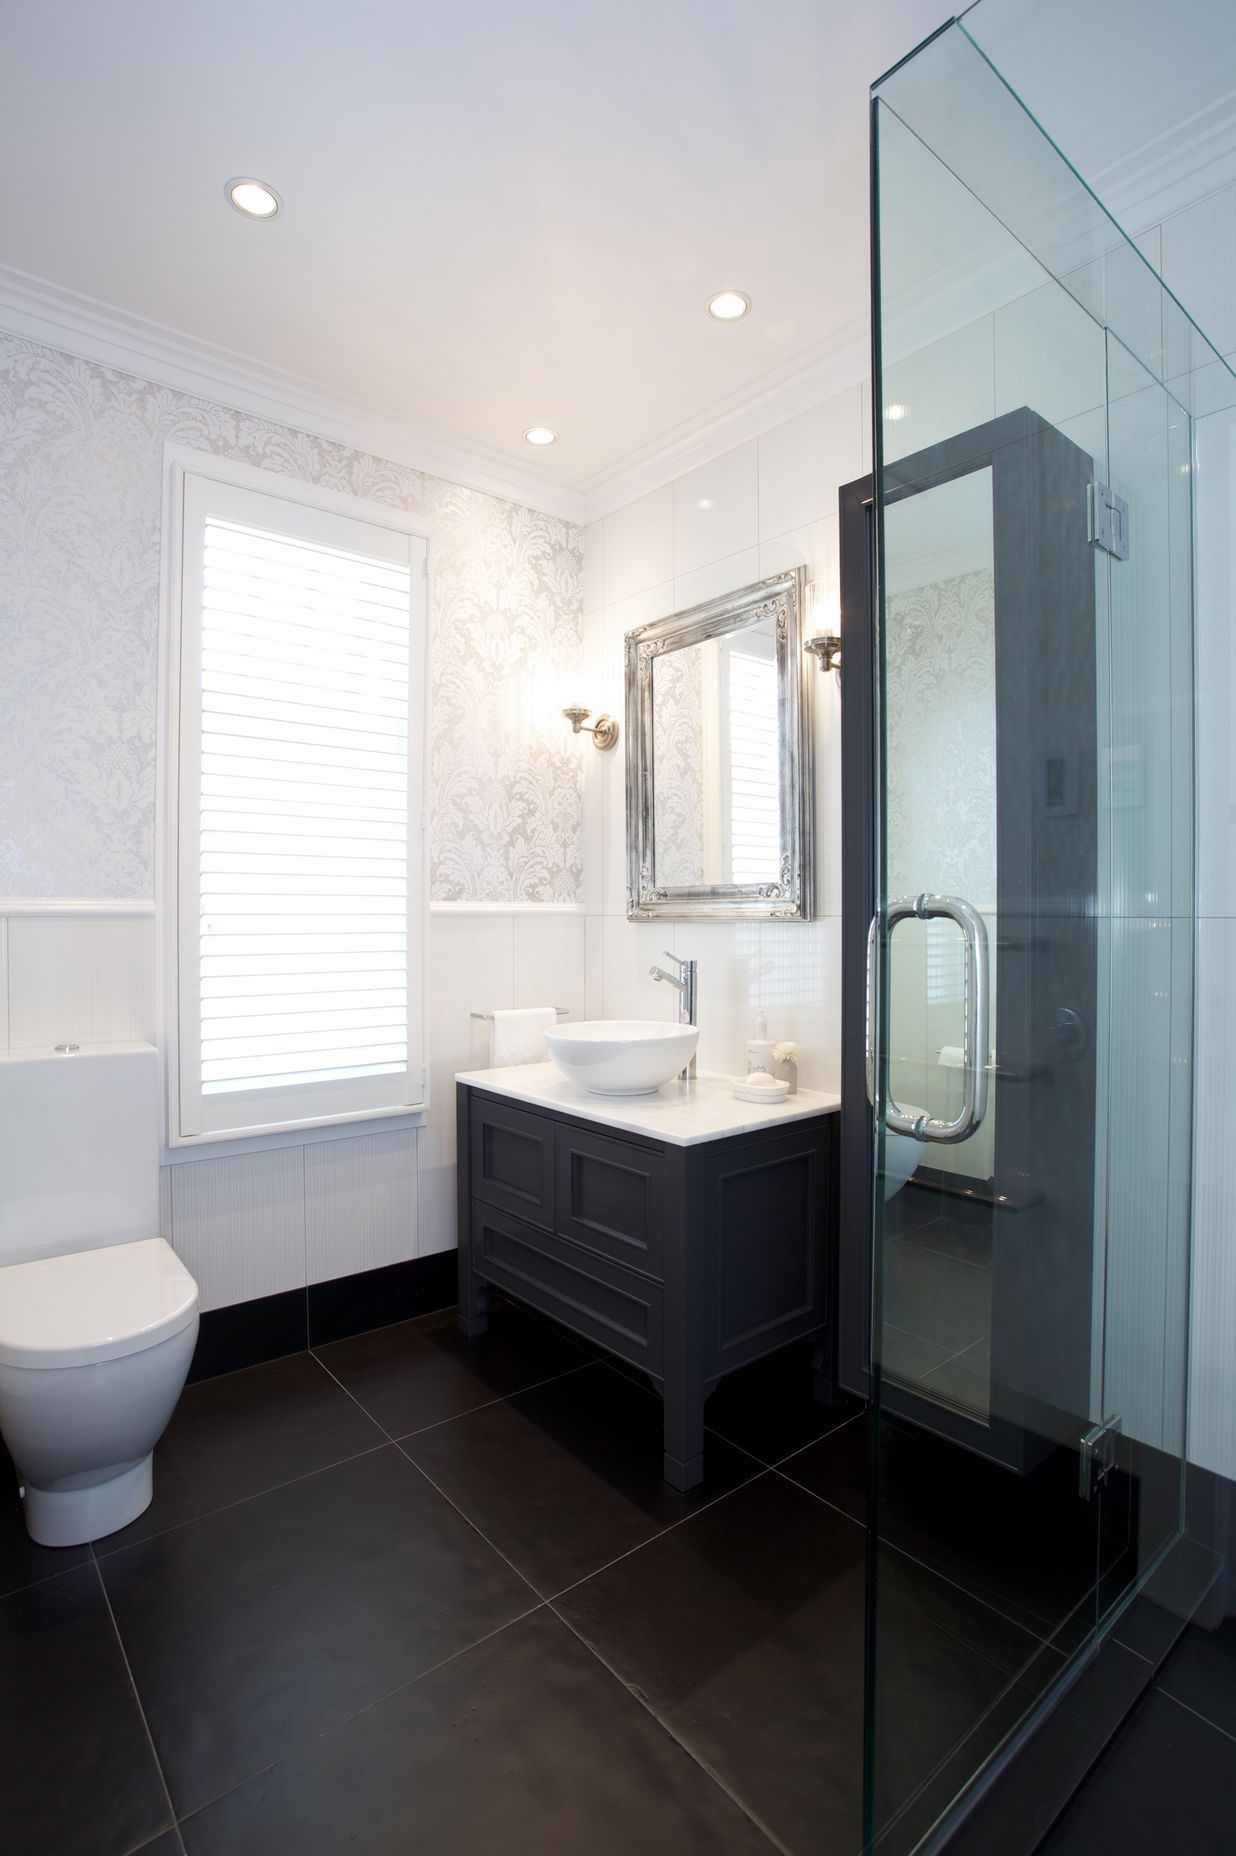 Remuera Powder room, En-suite, Family and Guest Bathrooms